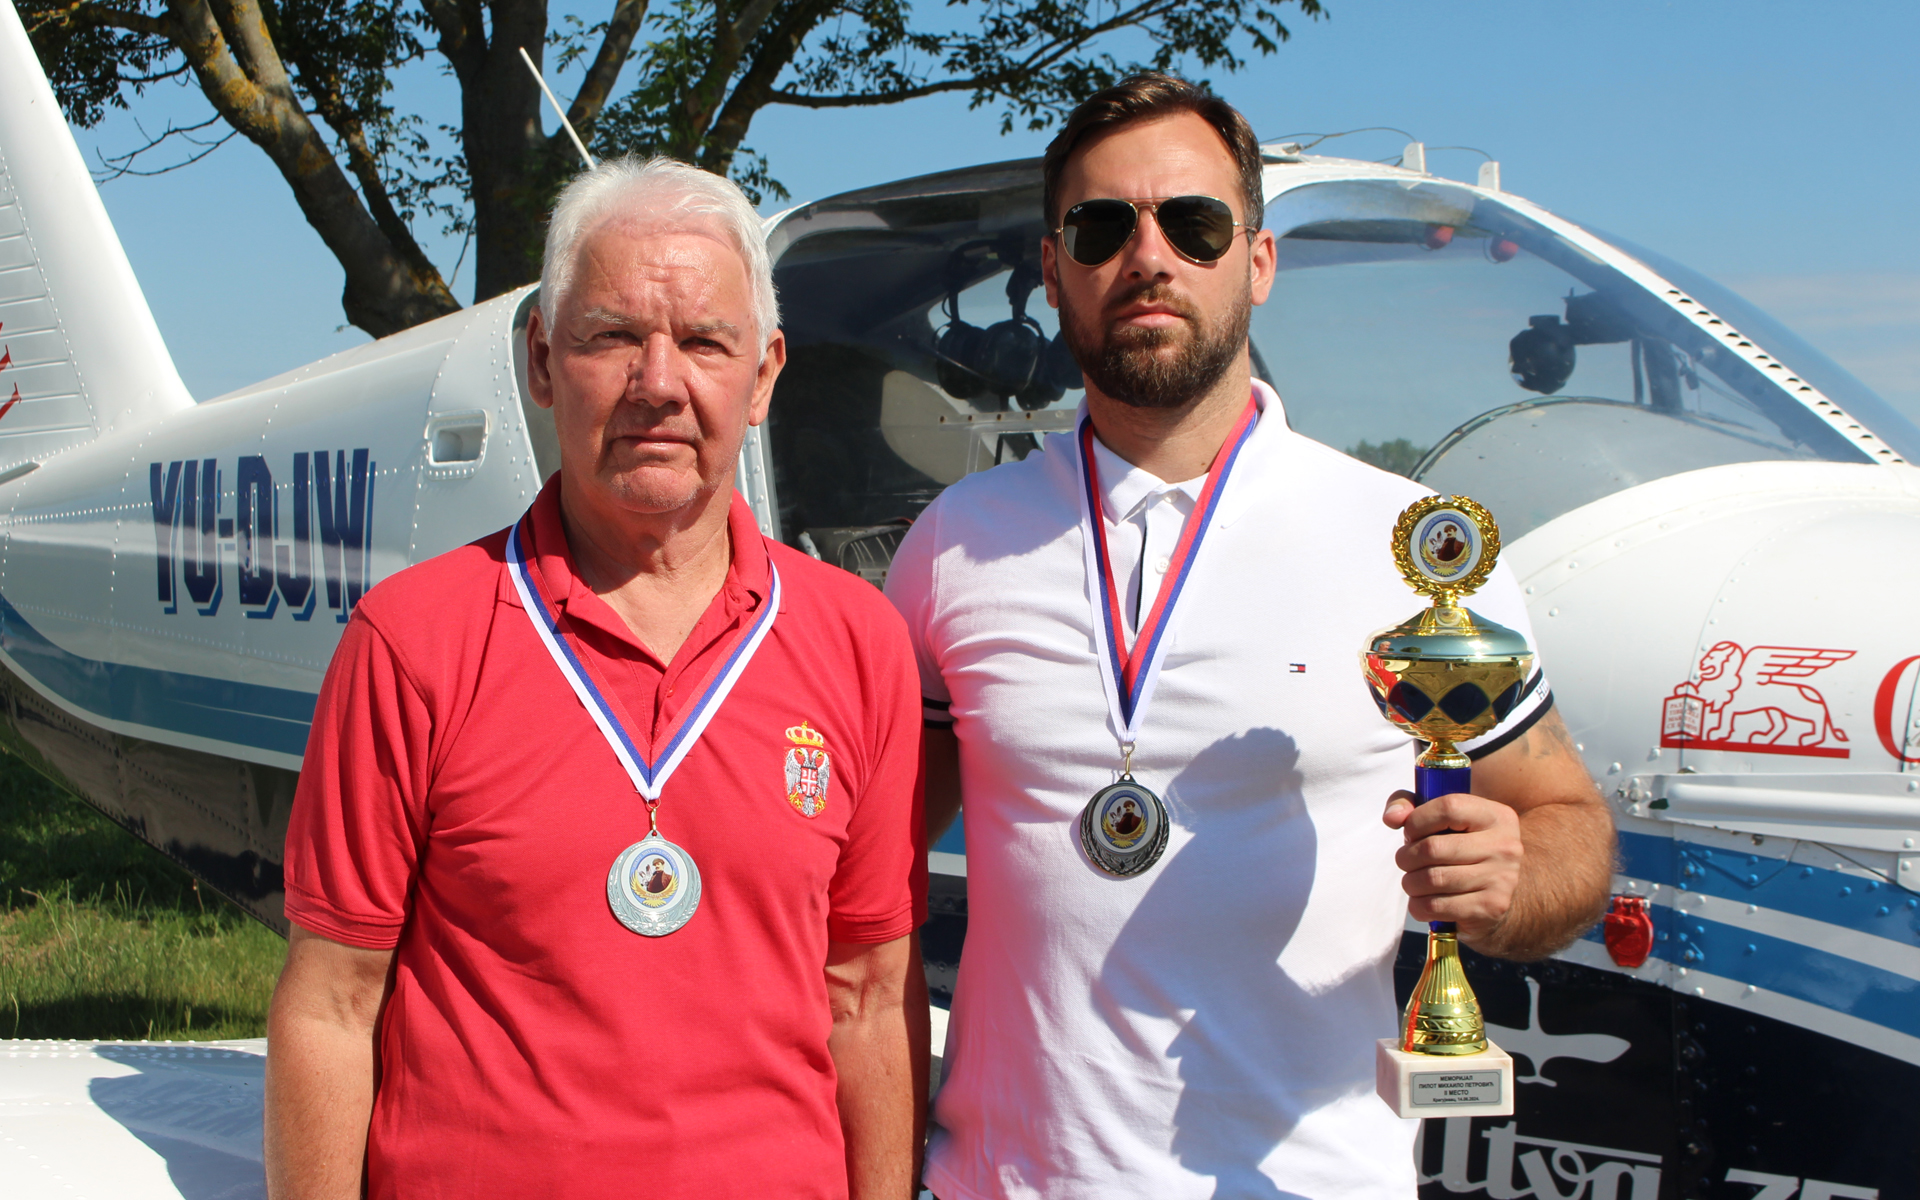 Pilotska posada Nikola Naumović i Ljubiša Naumović osvojila 2. mesto na Memorijalnom kupu “Pilot Mihajlo Petrović”